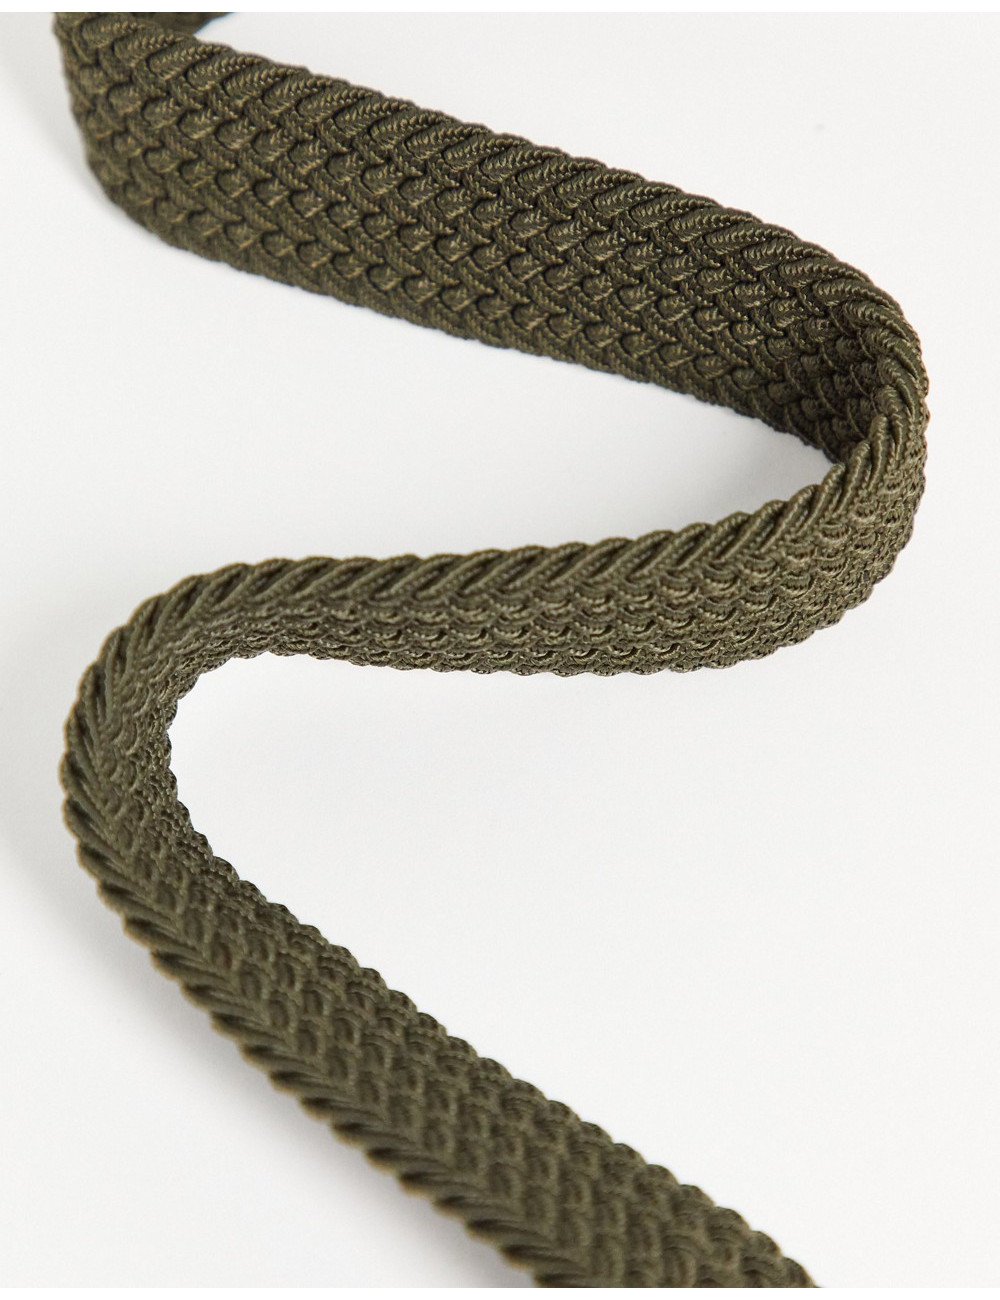 Carhartt WIP Jackson cord belt